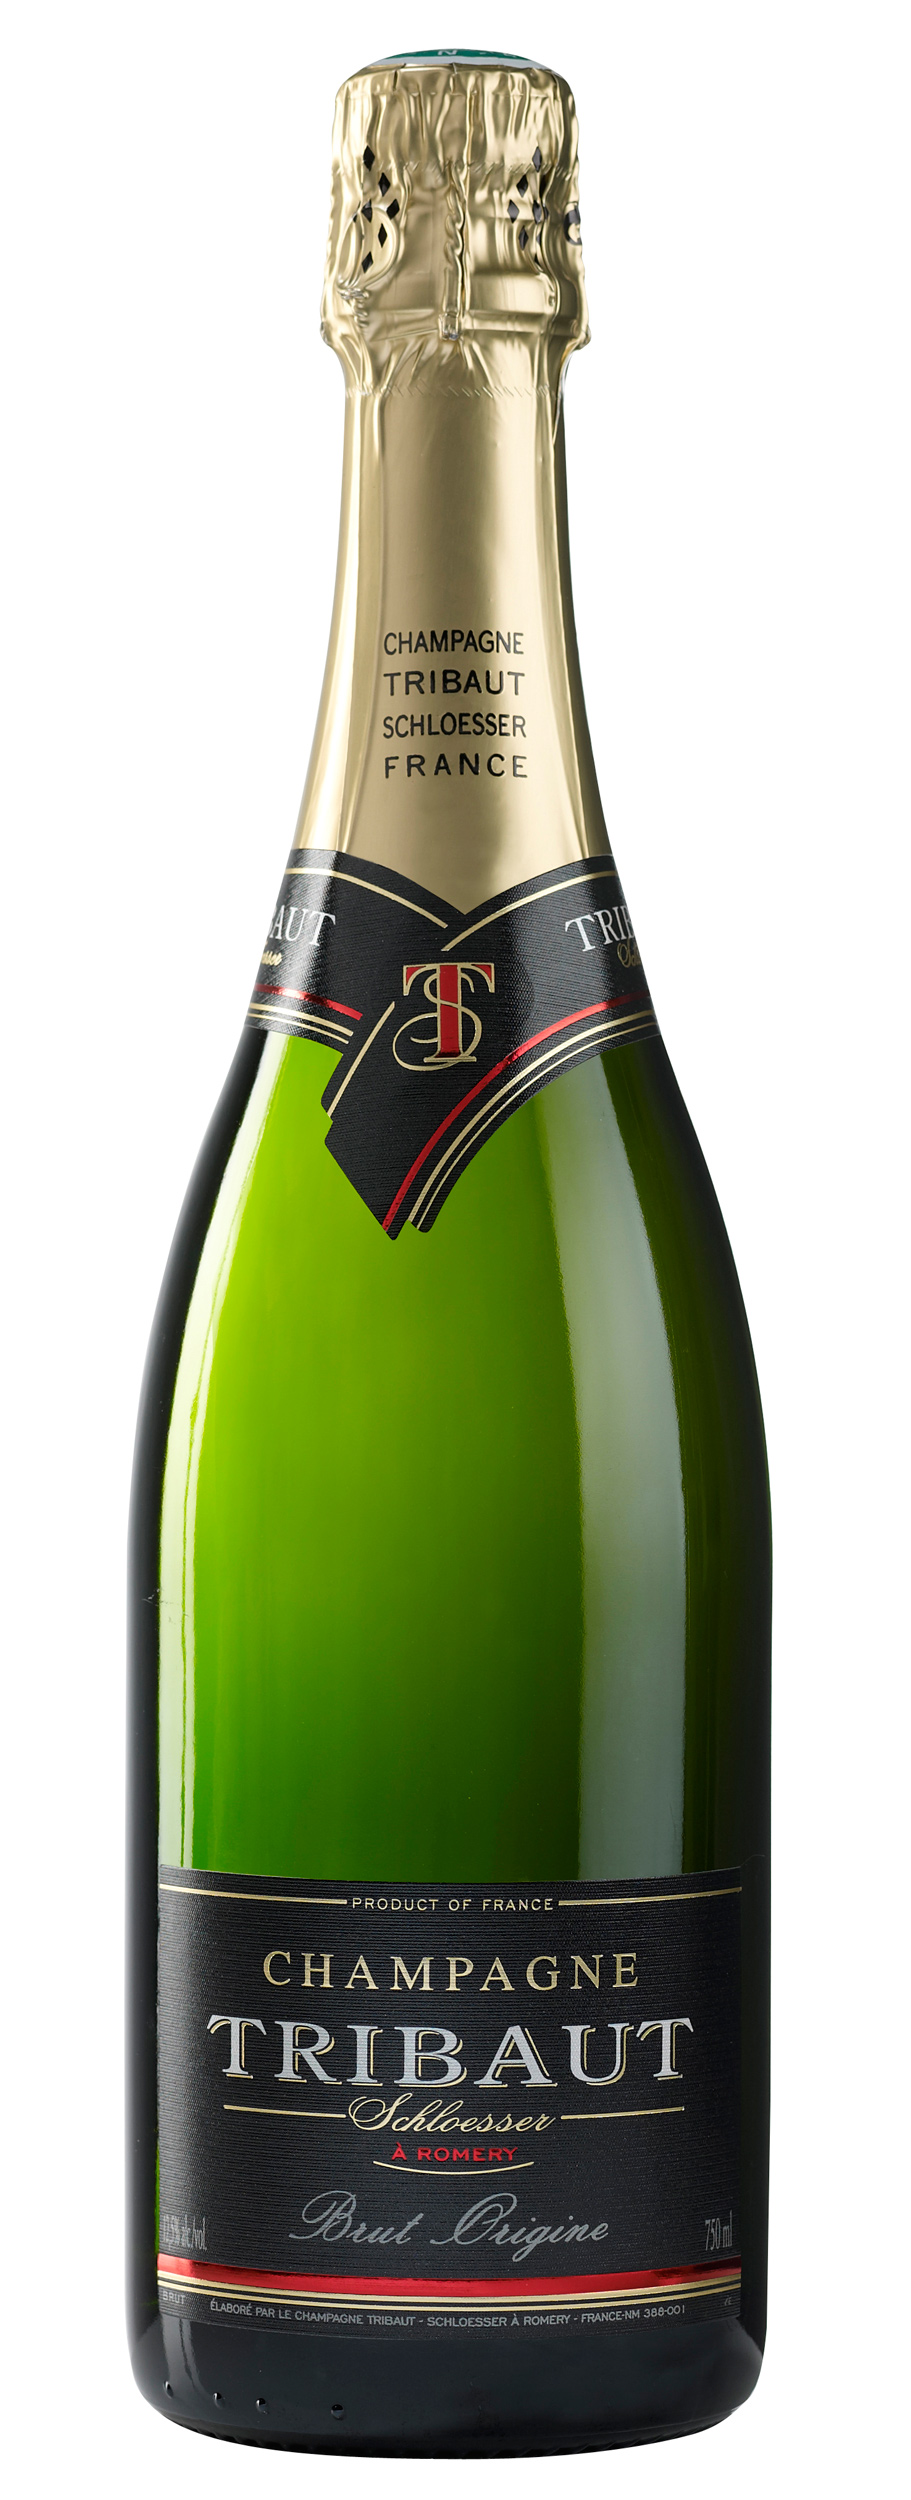 NV Champagne Tribaut Le Brut Origine 3 Liter - click image for full description